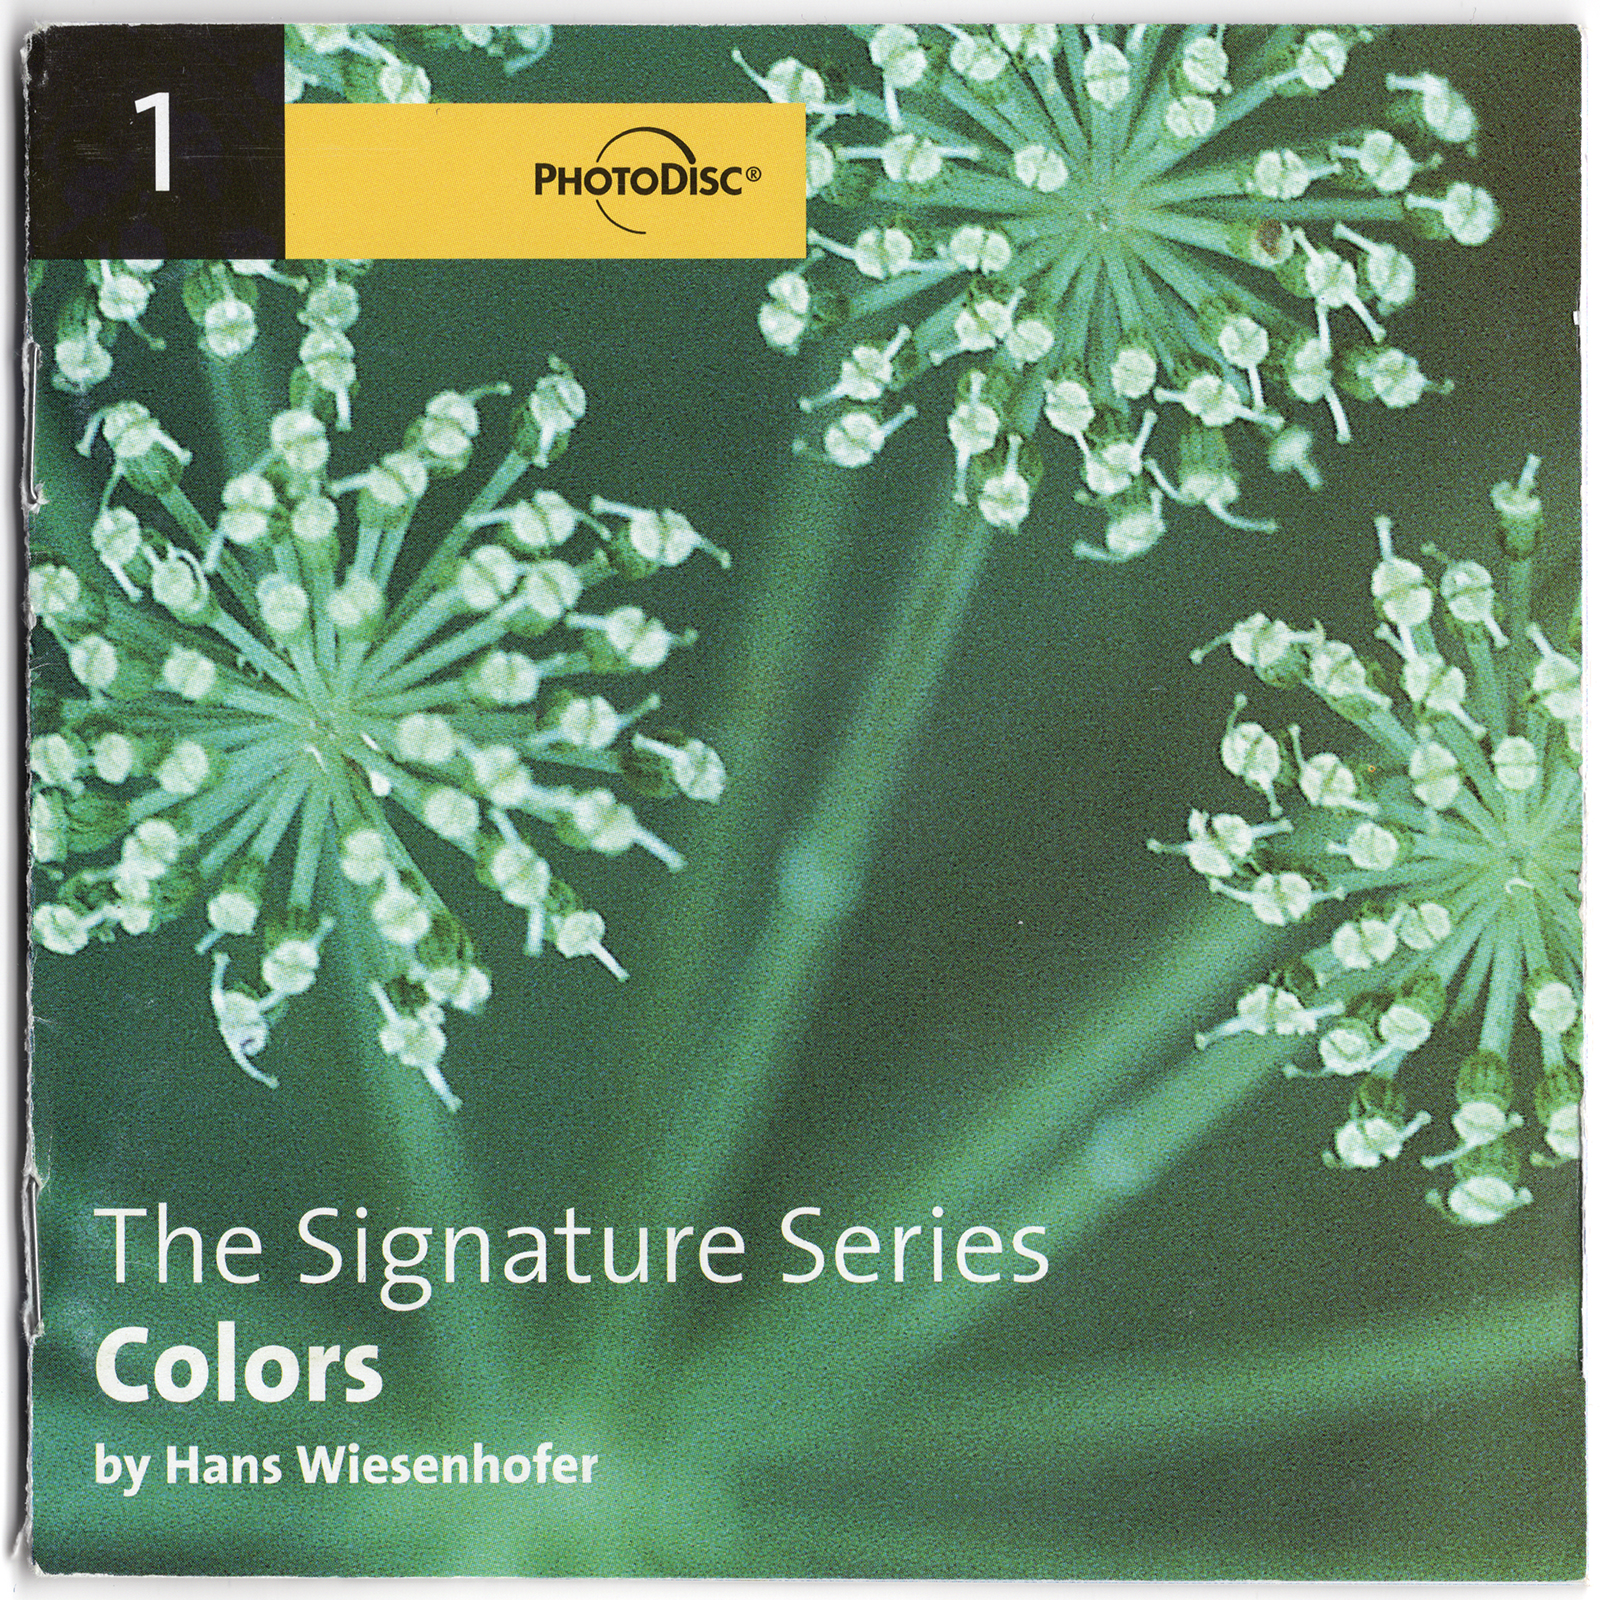 Volume 1 - The Signature Series: Colors (PhotoDisc) (1999 ...